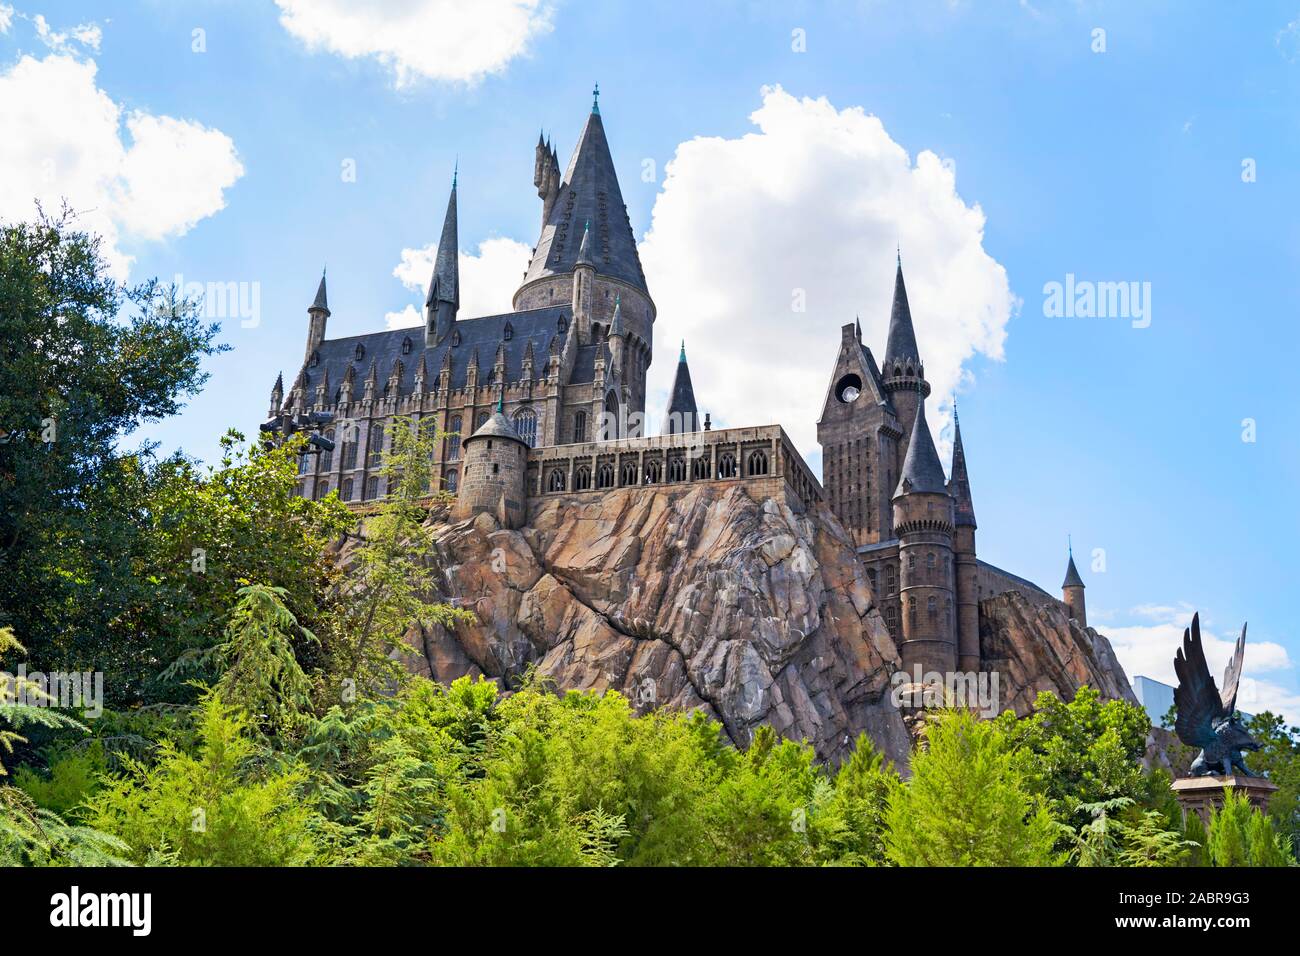 Hogwarts Castle, Universal Studios Orlando, Wizarding World of Harry Potter, Islands of Adventure, Universal Hogwarts, Florida, USA Stock Photo